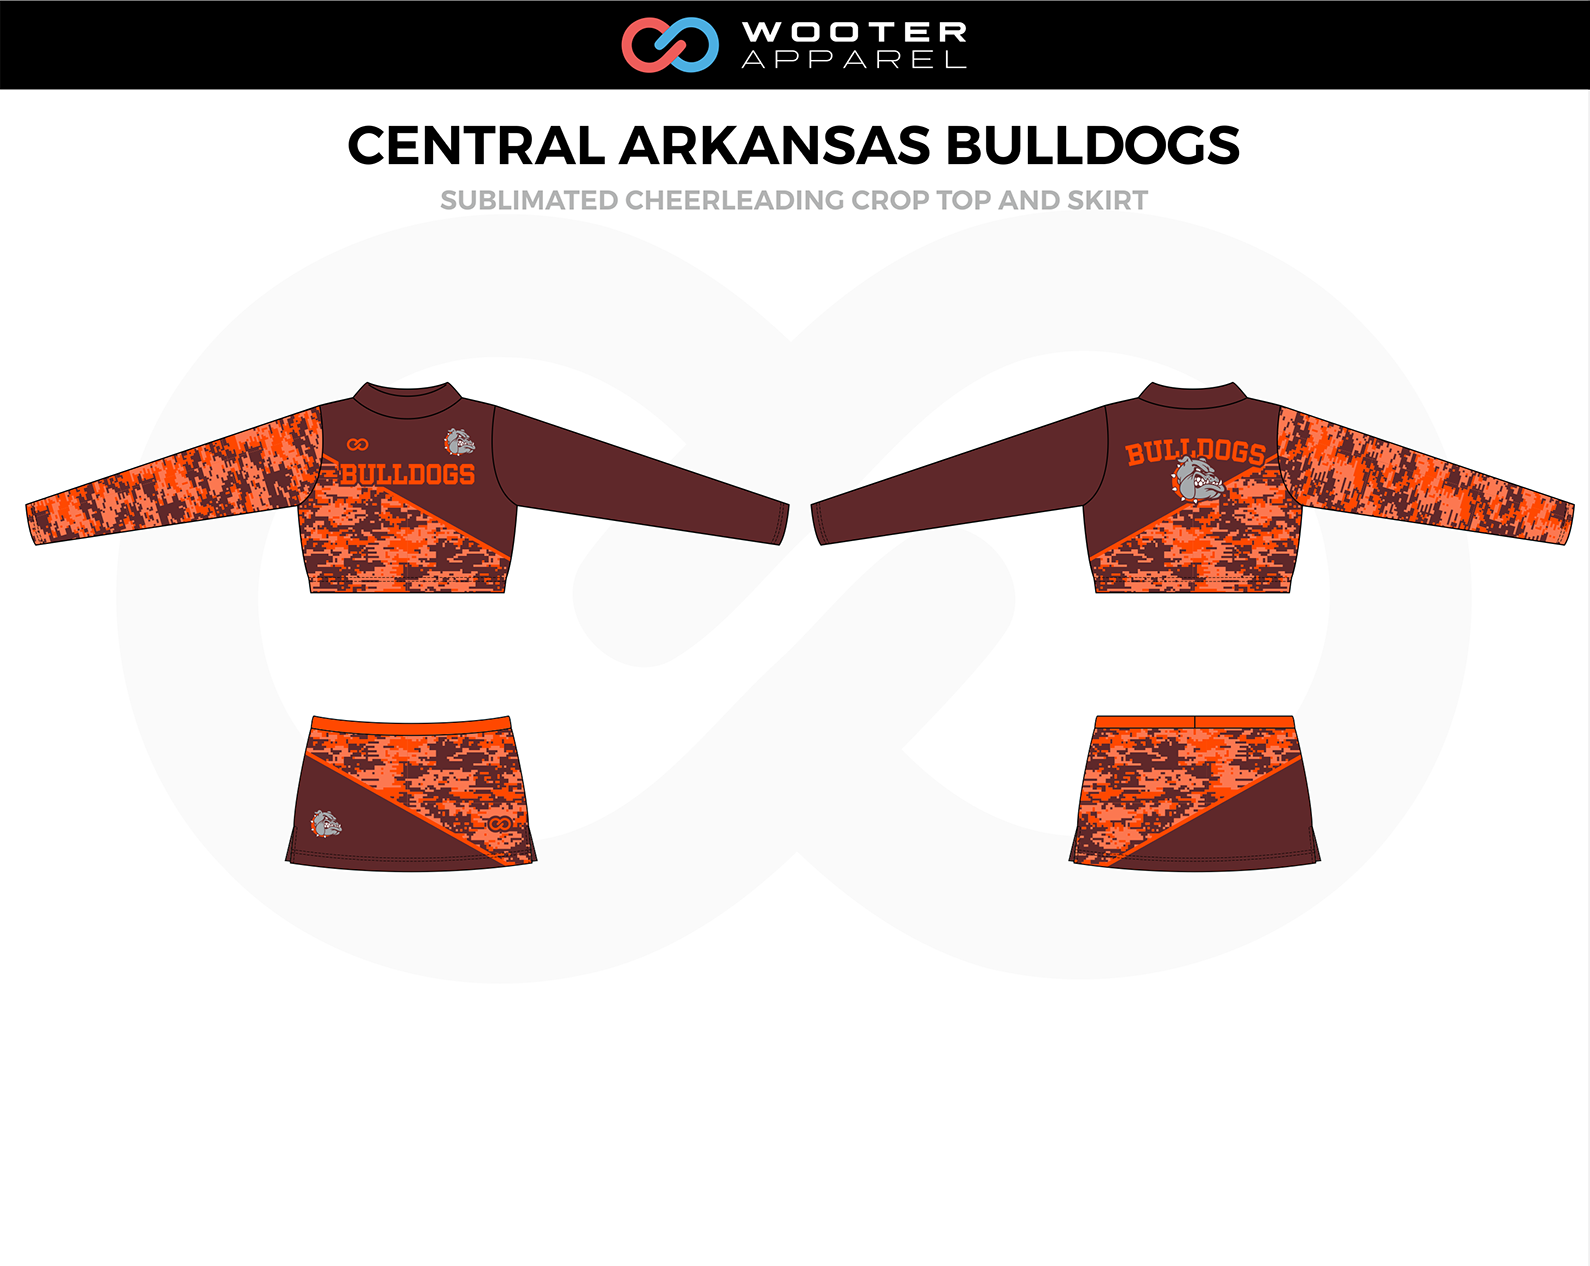 Central Arkansas Bulldogs Custom Cheer Uniforms, 2nd view	